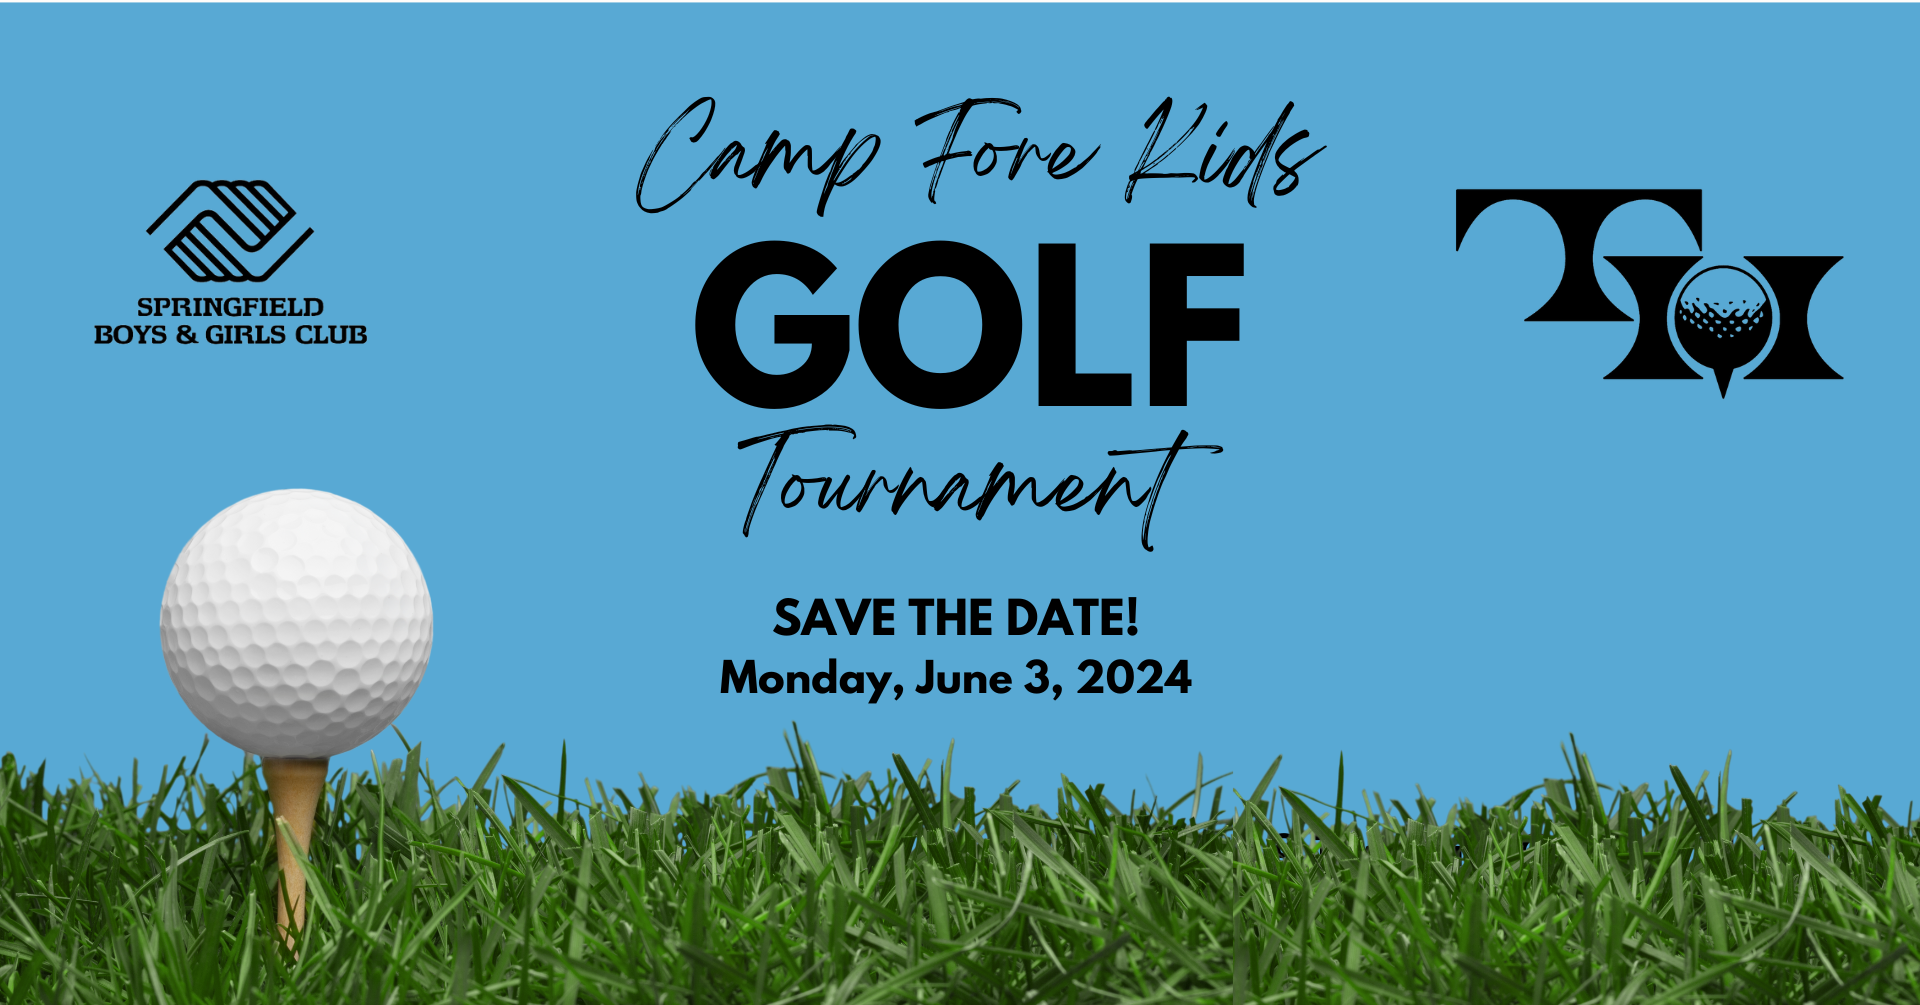 Springfield Boys & Girls Club Camp Fore Kids Golf Tournament